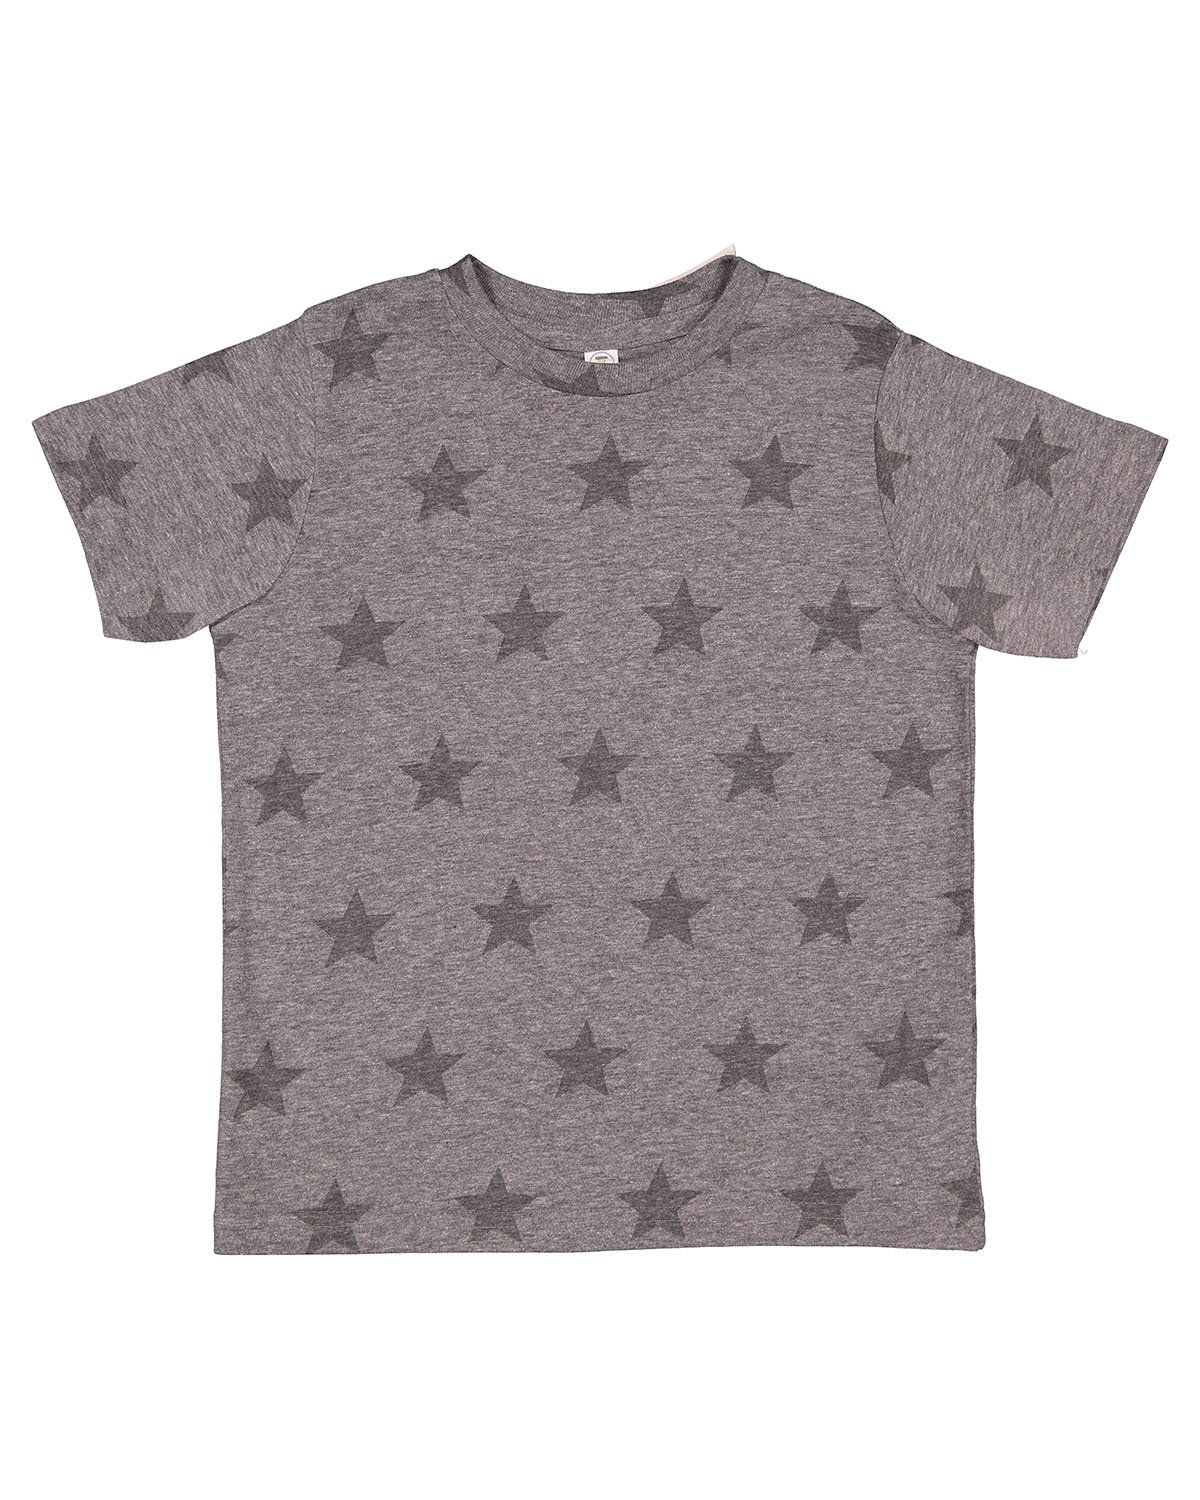 'Code Five 3029 Toddler Five Star T Shirt'